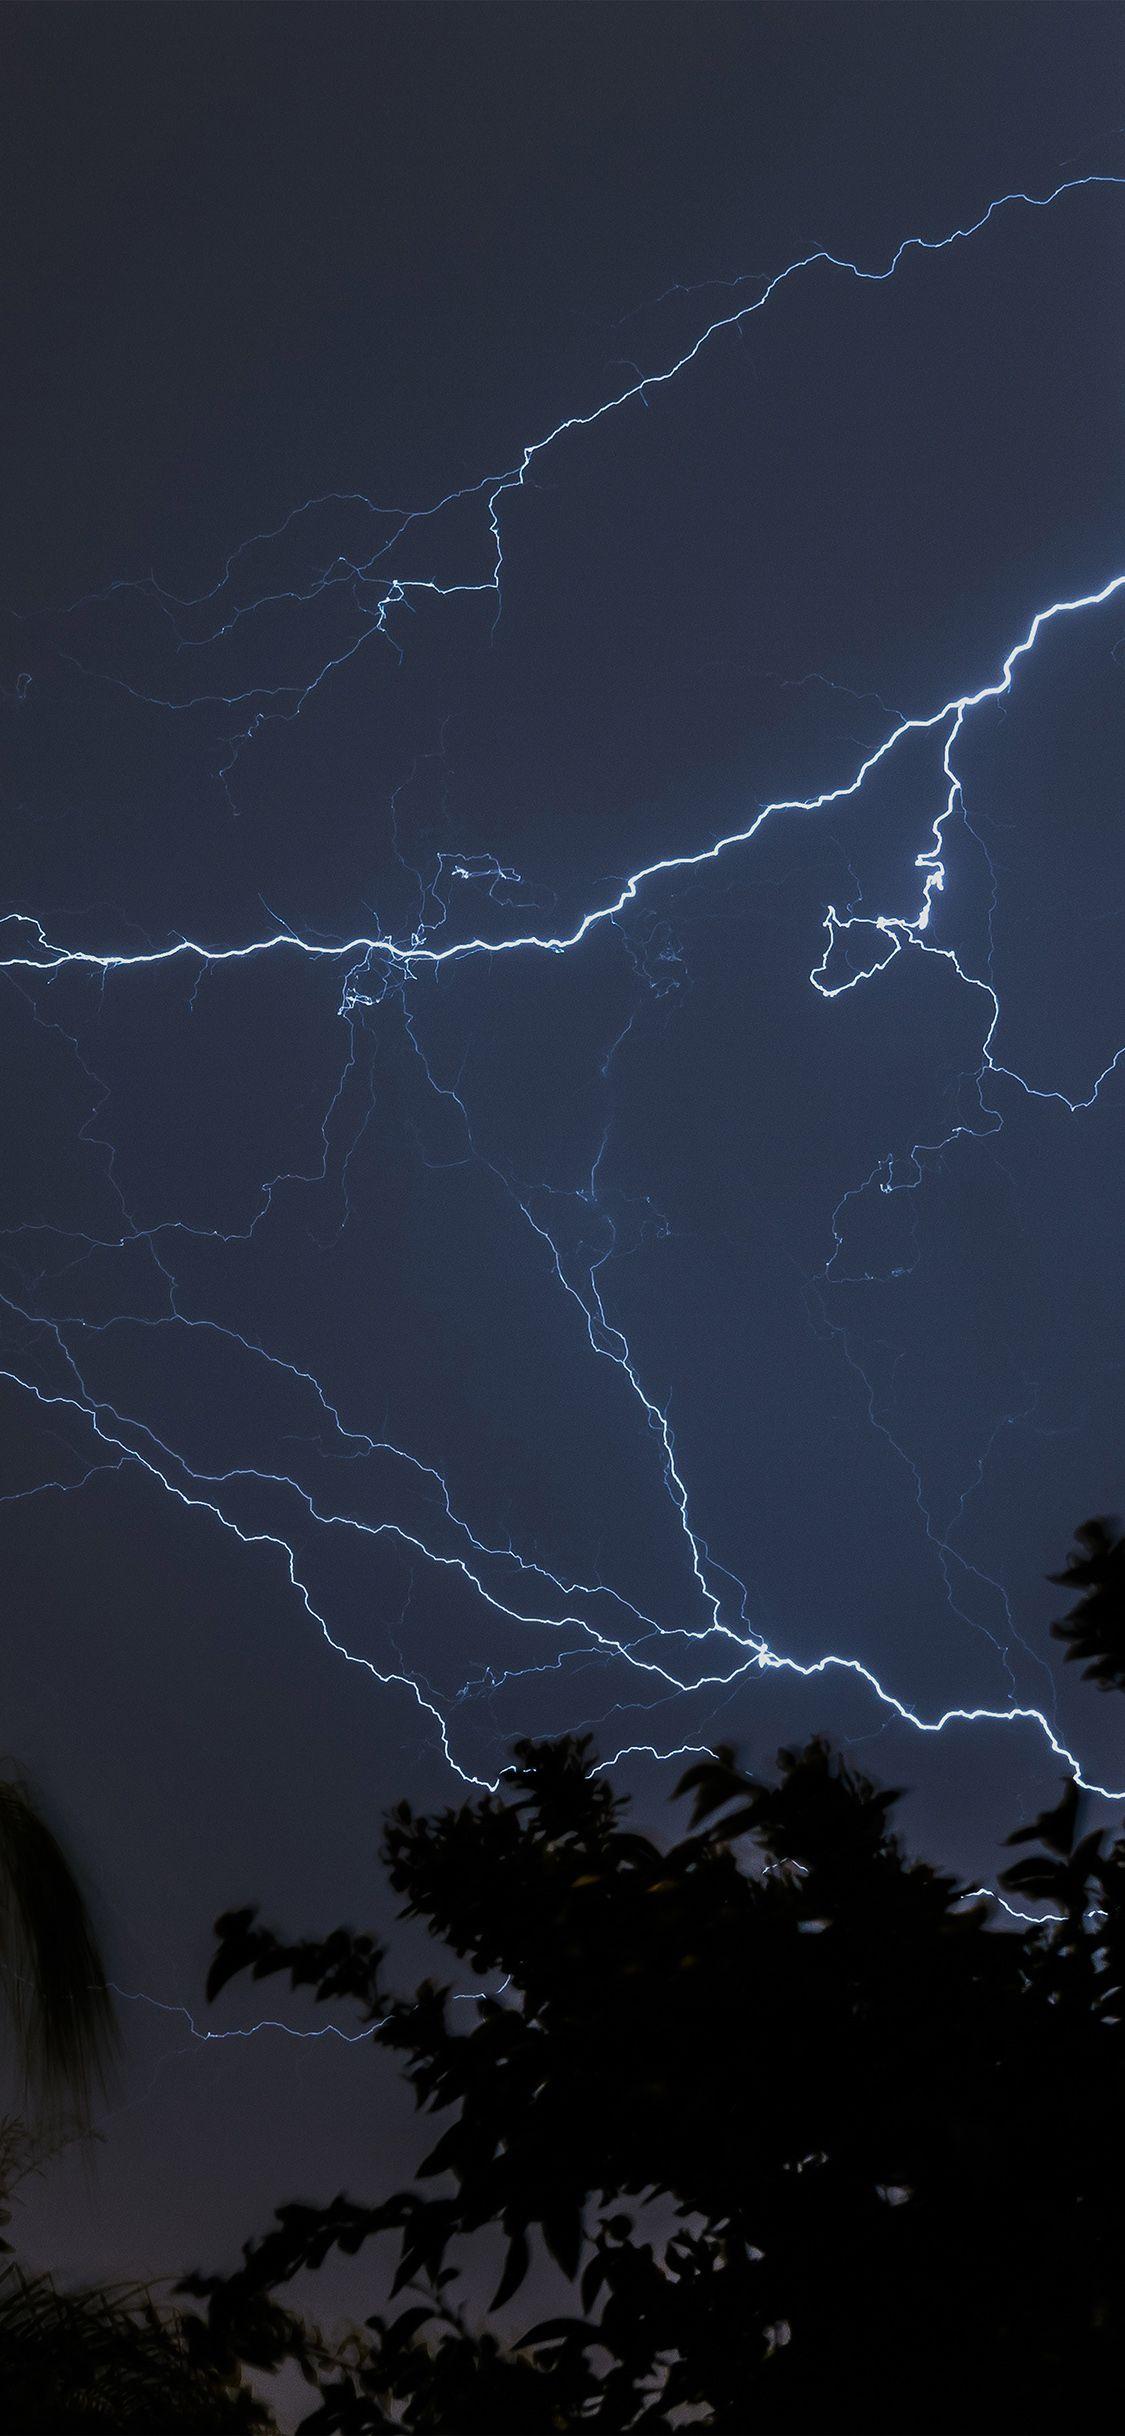 iPhone X wallpaper. thunder bolt sky night dark